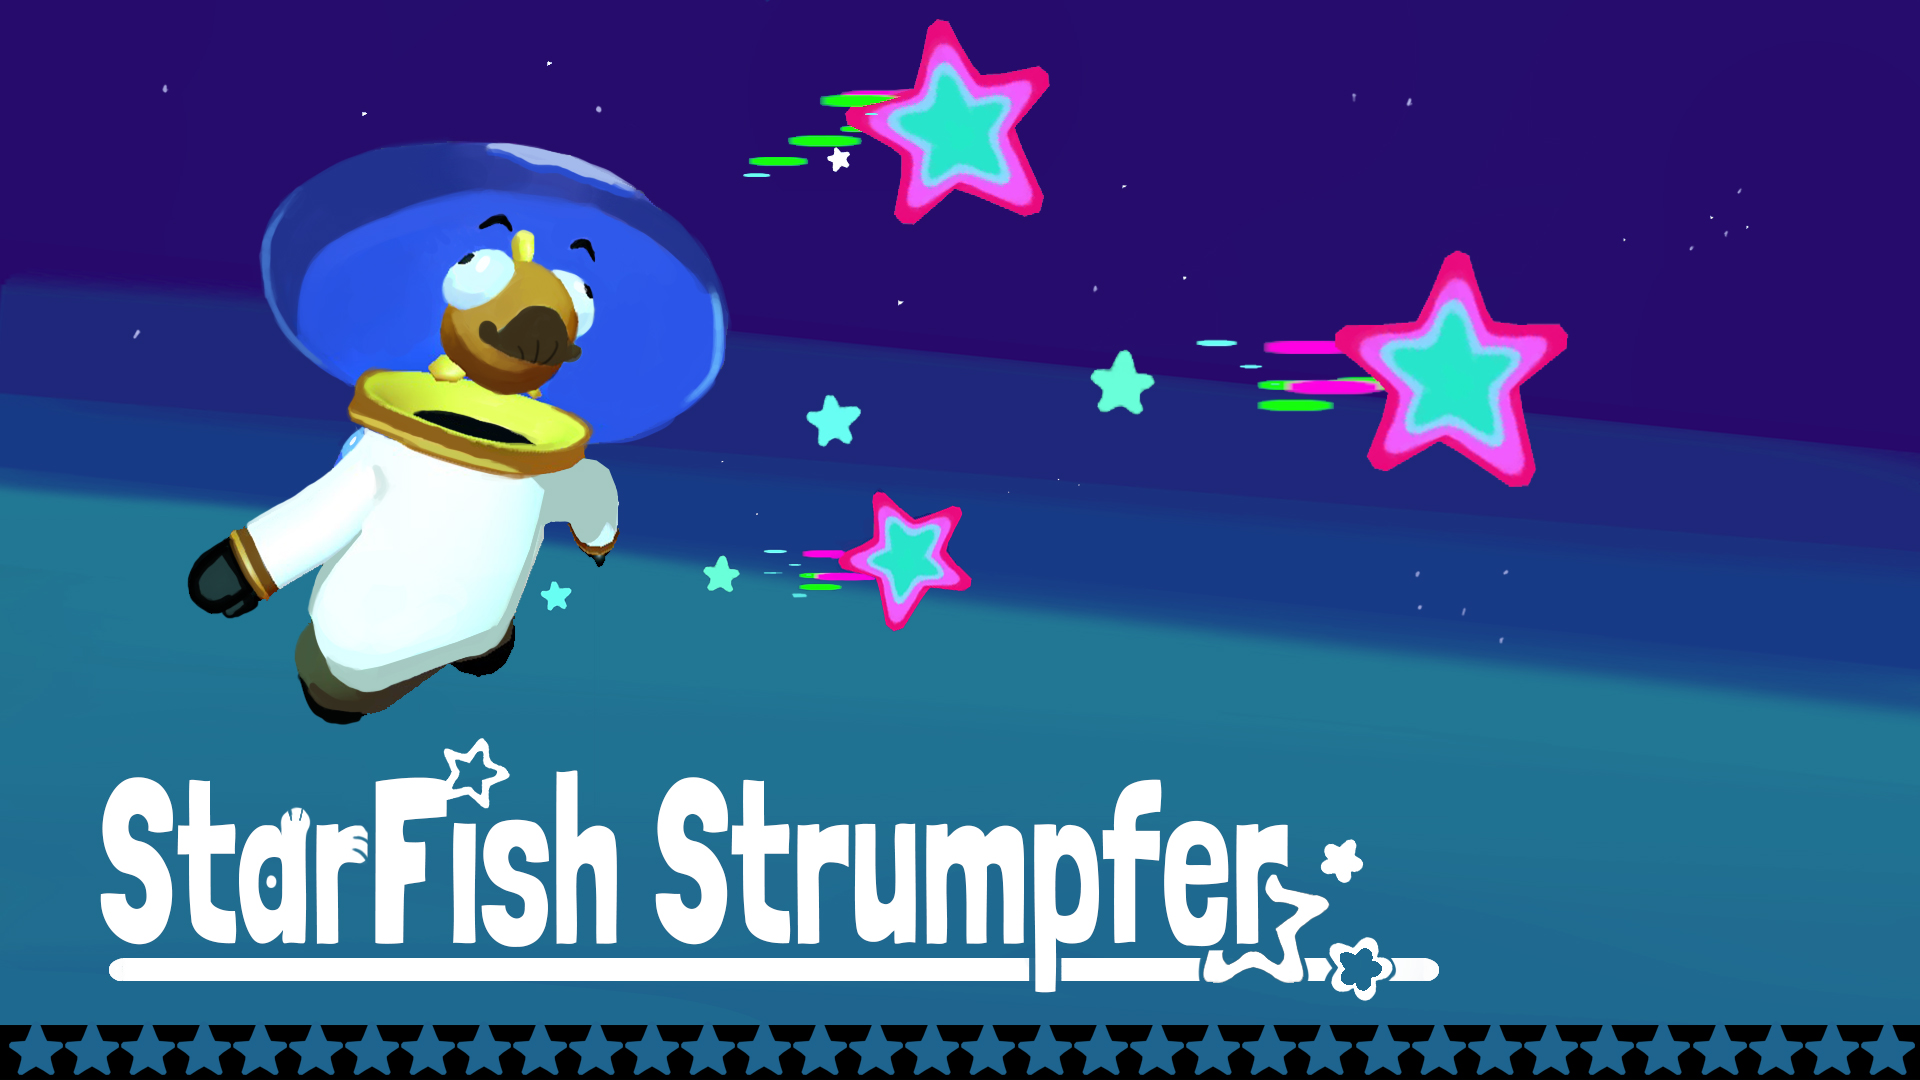 Starfish Strumpfer